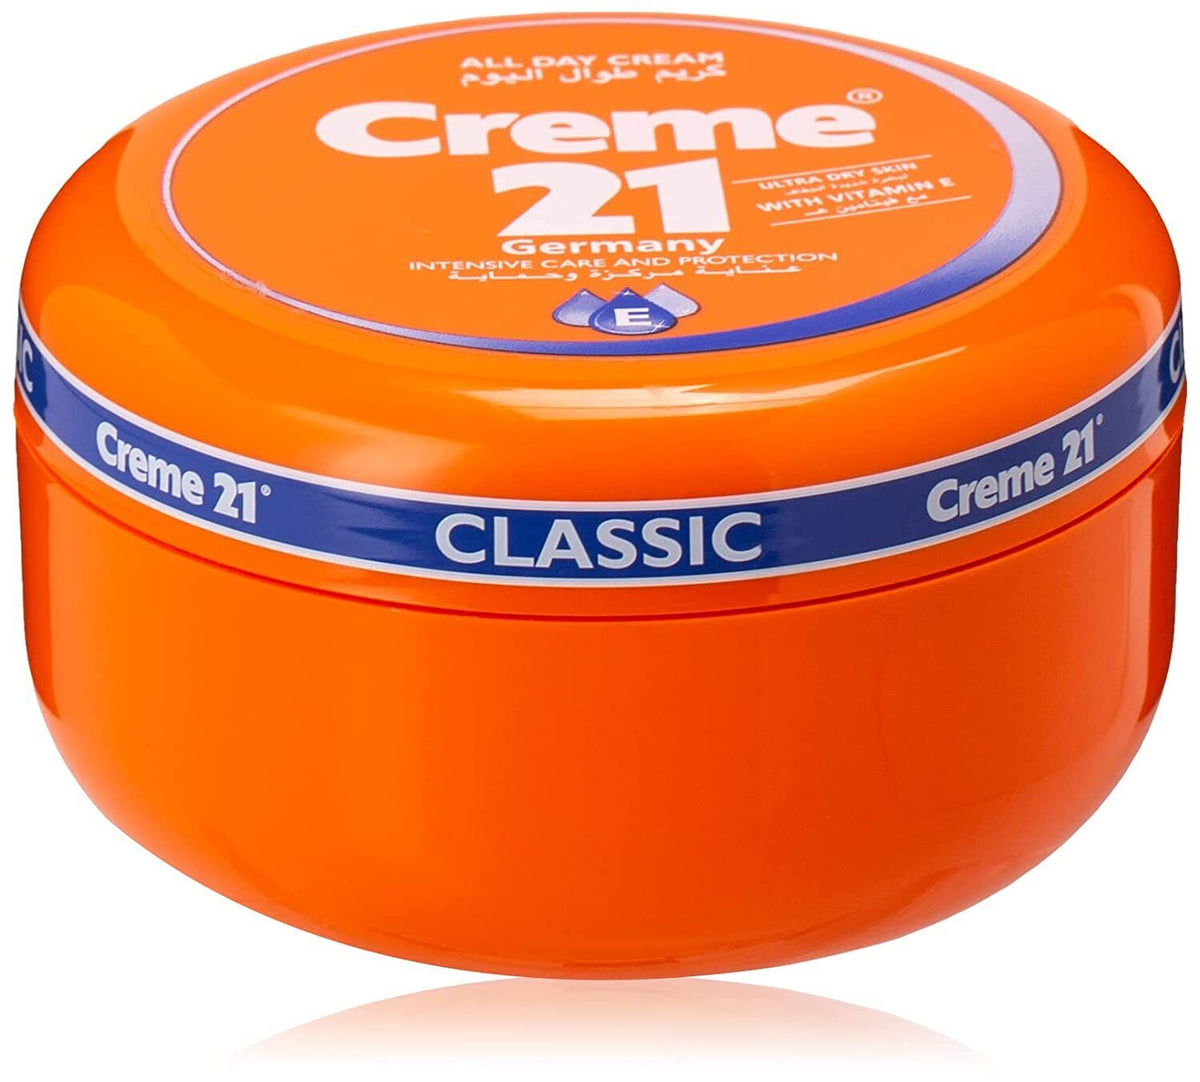 Creme 21 All Day Cream With Vitamin E Moisturizing - 250ml